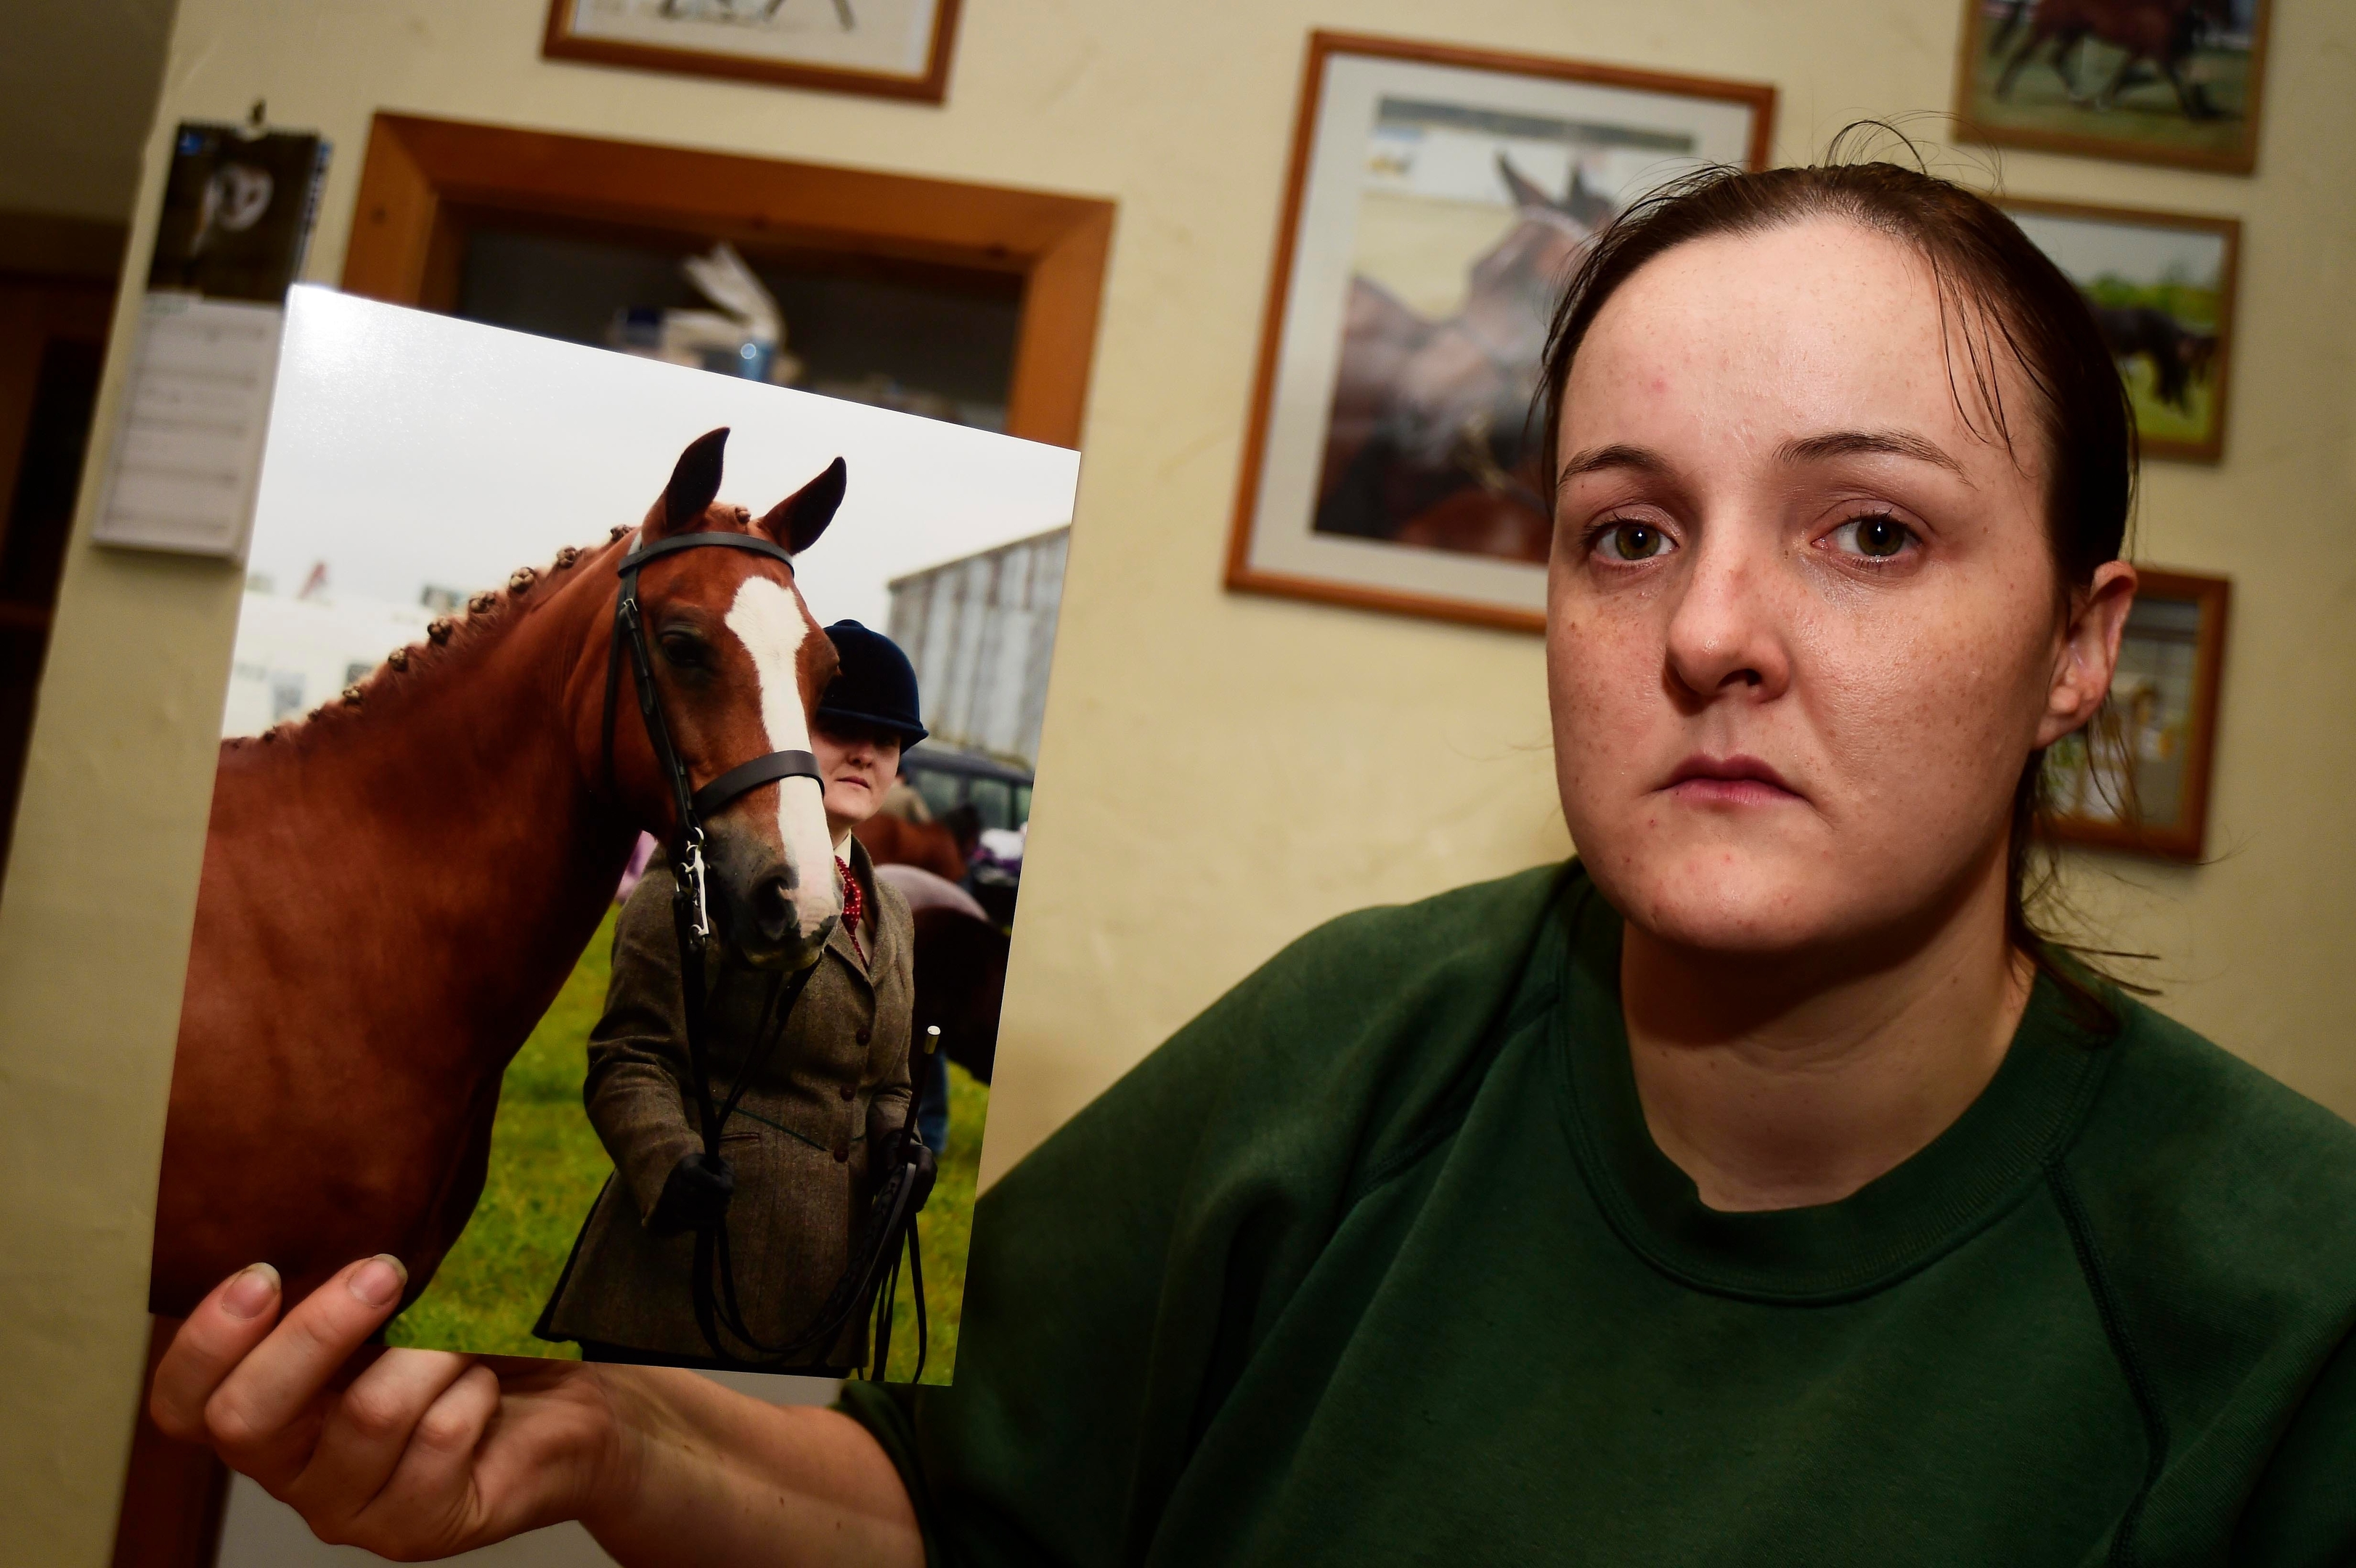 Zoe, devastated after the violent death of her horse